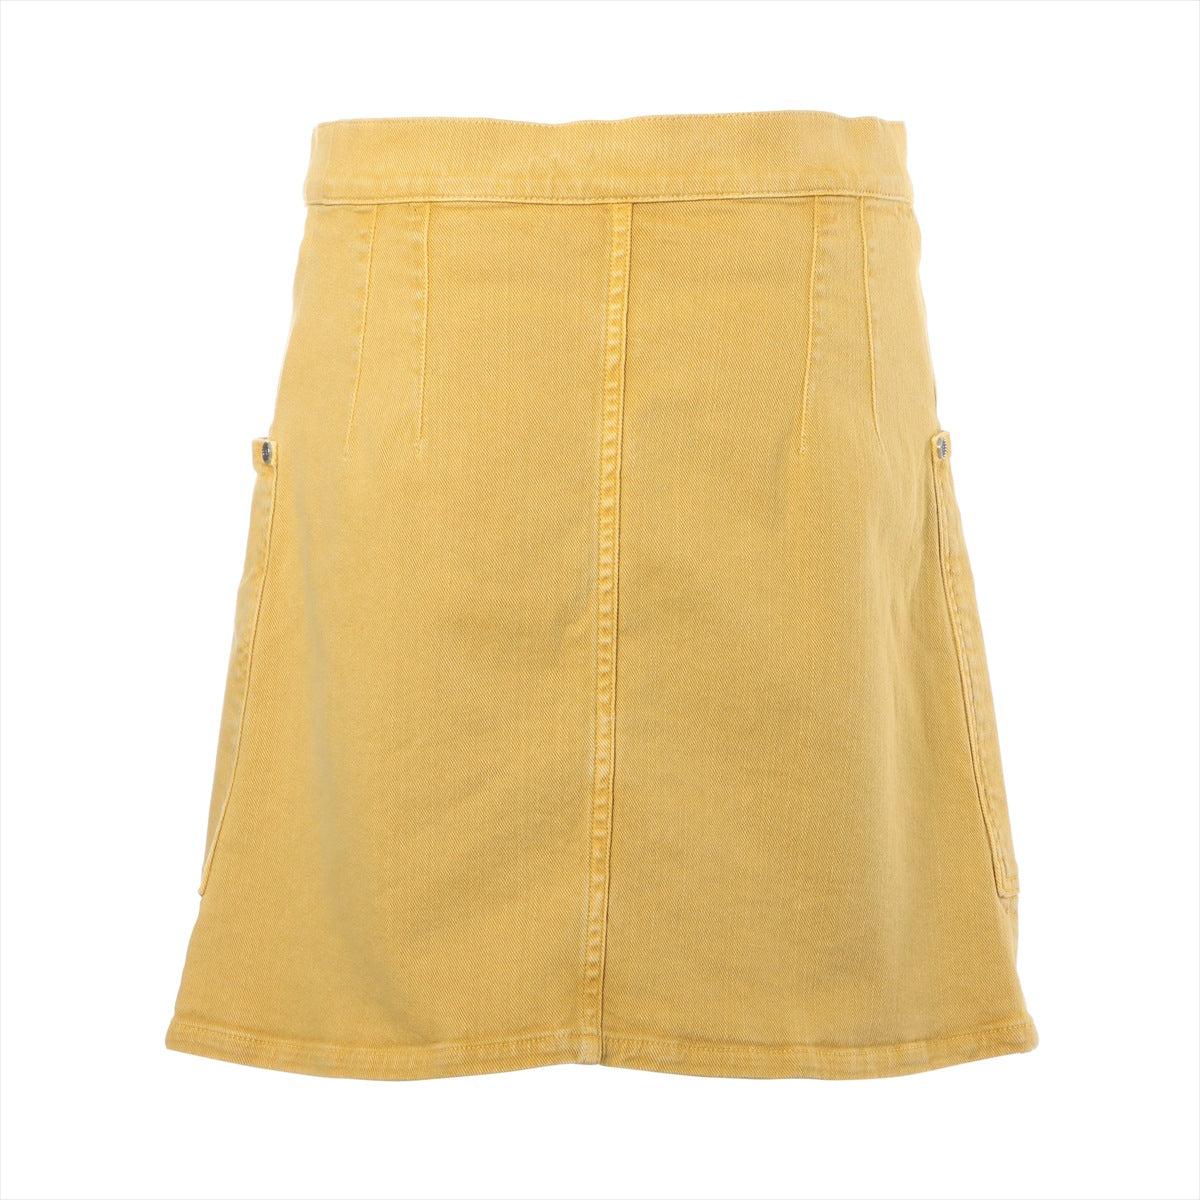 Chanel Coco Button Cotton Skirt 36 Ladies' Yellow gold  denim zip up miniskirt P56375V42677